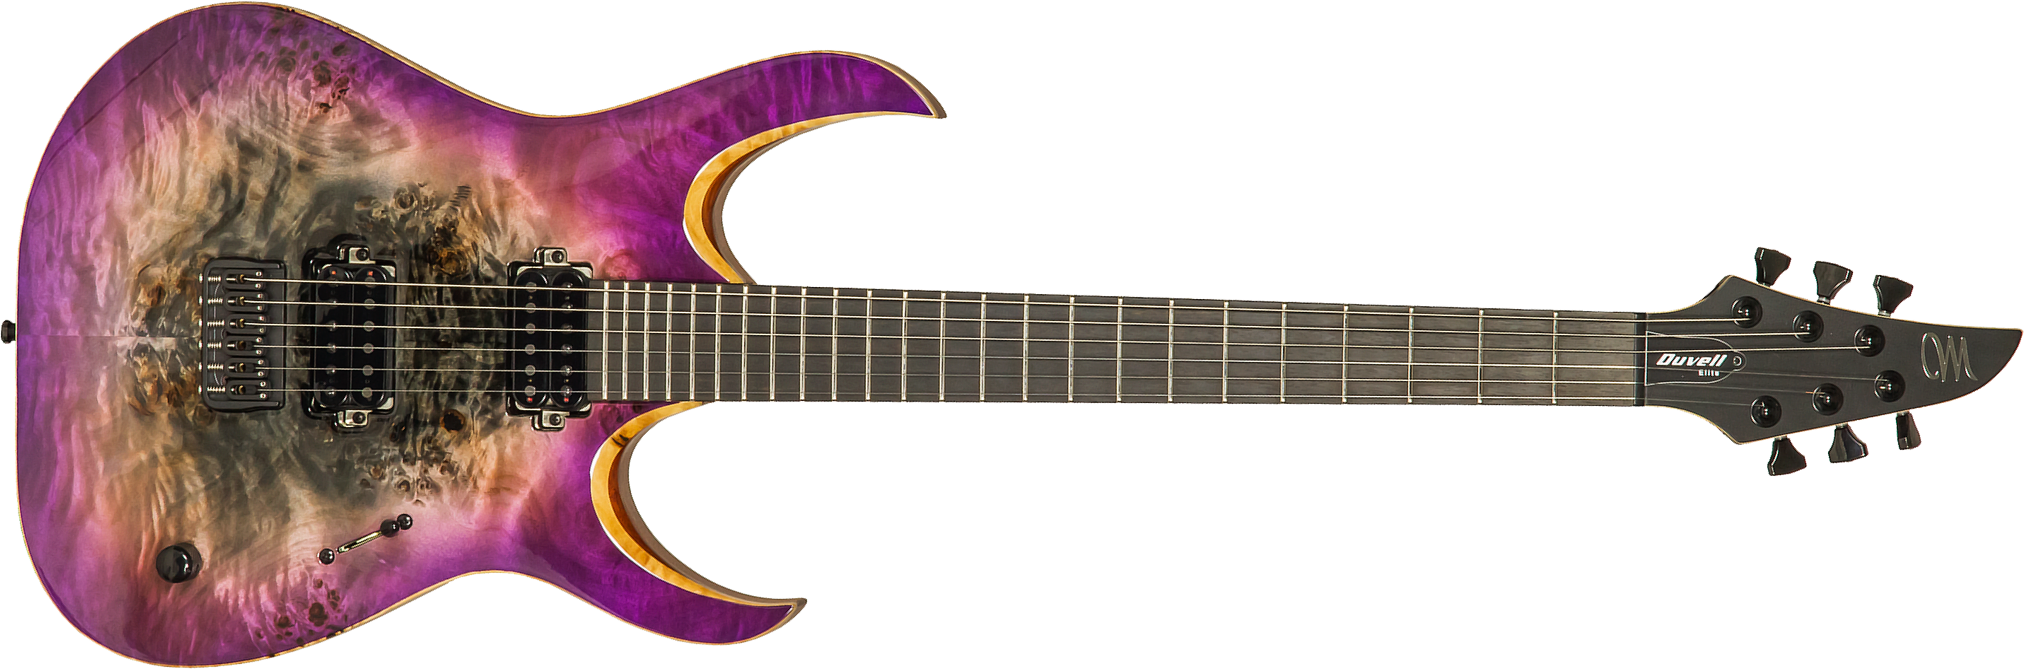 Mayones Guitars Duvell Elite 6 Hh Seymour Duncan Ht Eb #df2105470 - Supernova Purple - E-Gitarre aus Metall - Main picture